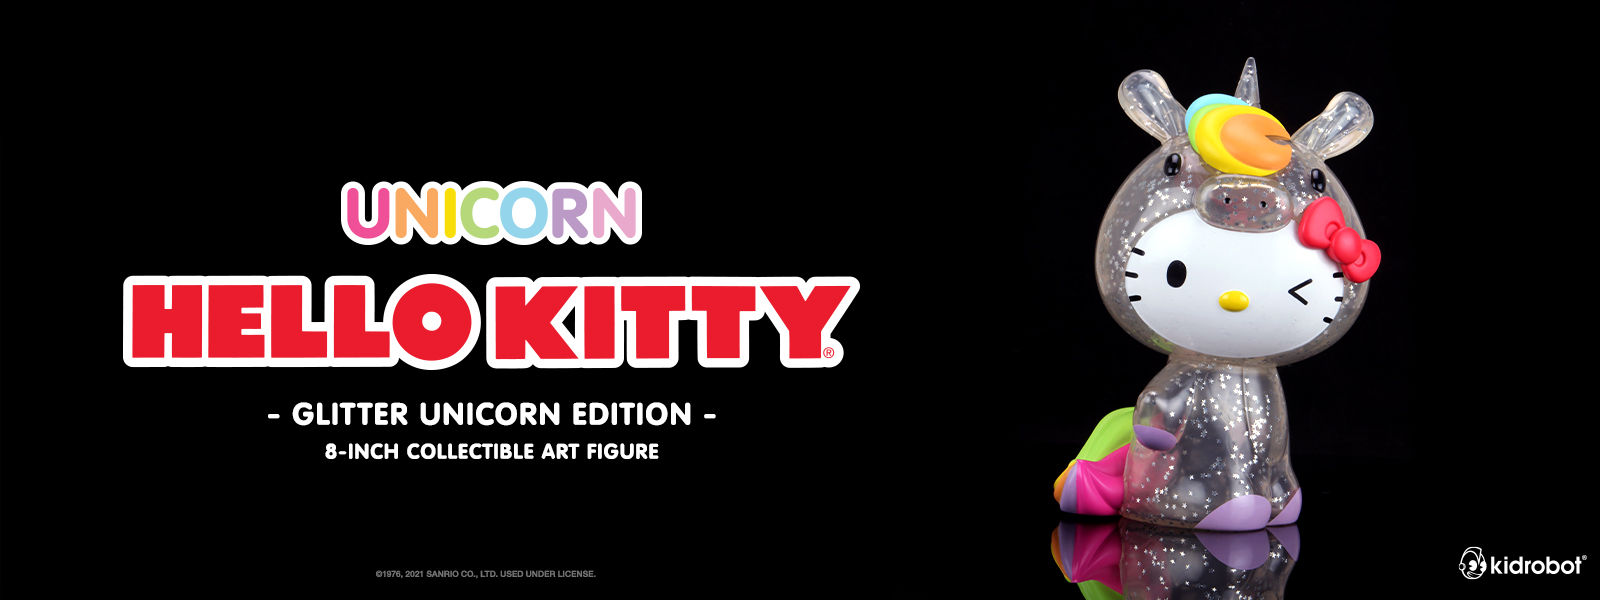 Hello Kitty Unicorn 8" Art Figure - Kidrobot.com Exclusive Glitter Edition Drops on February 11th, 2021 at 10am MT